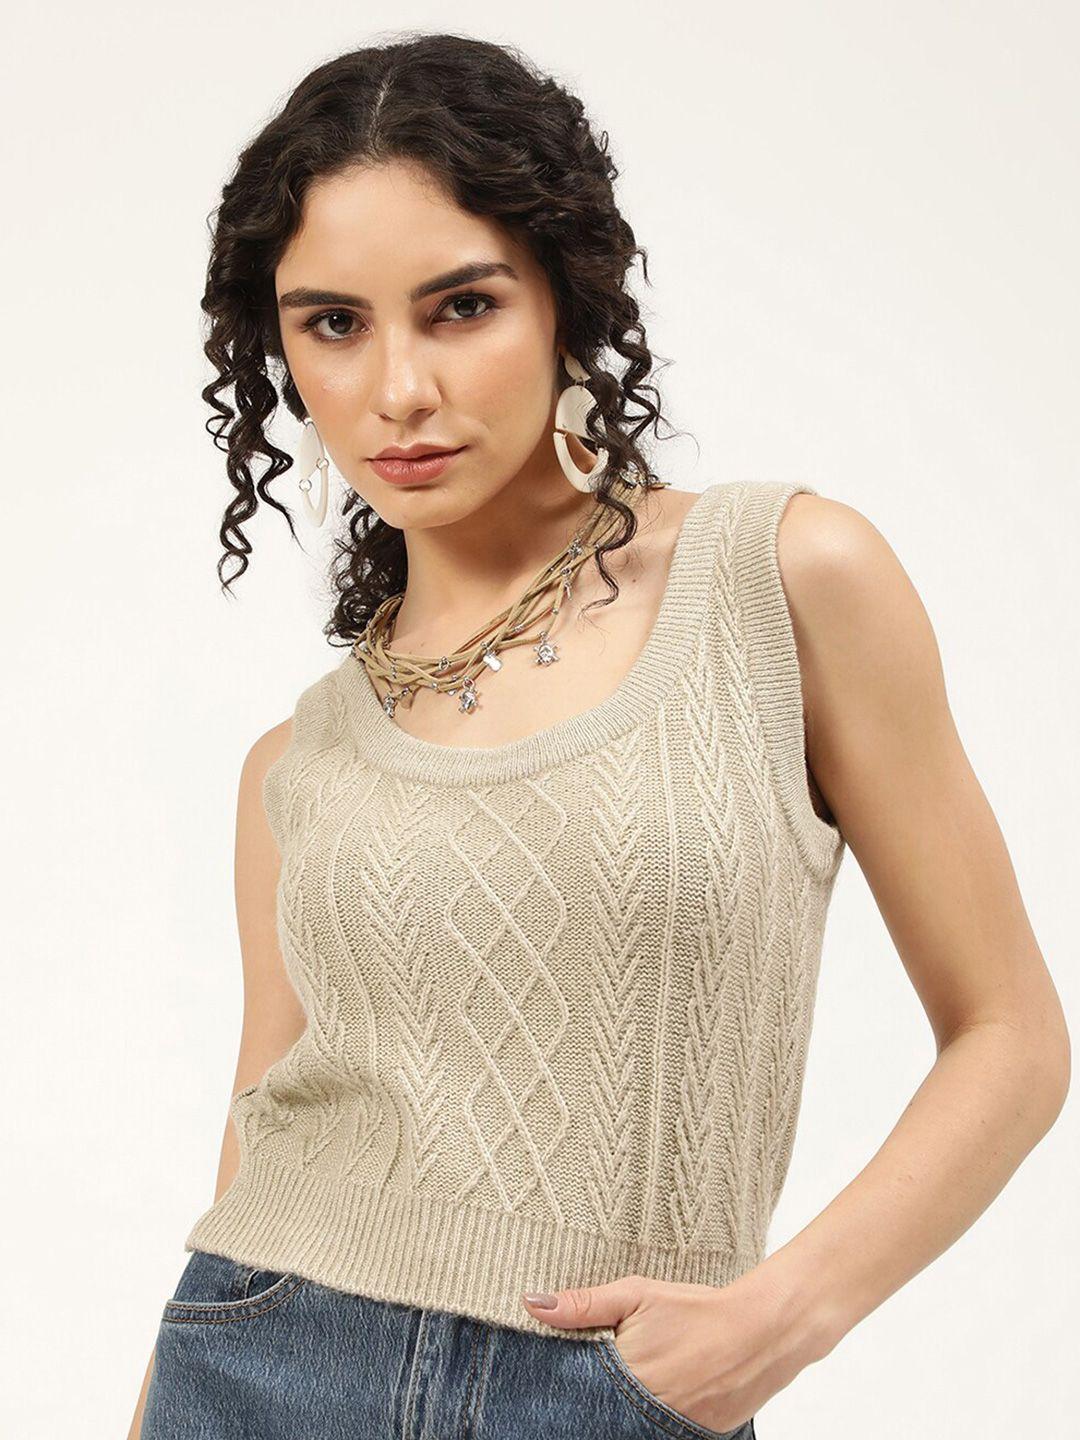 centrestage women cream-coloured cable knit sweater vest